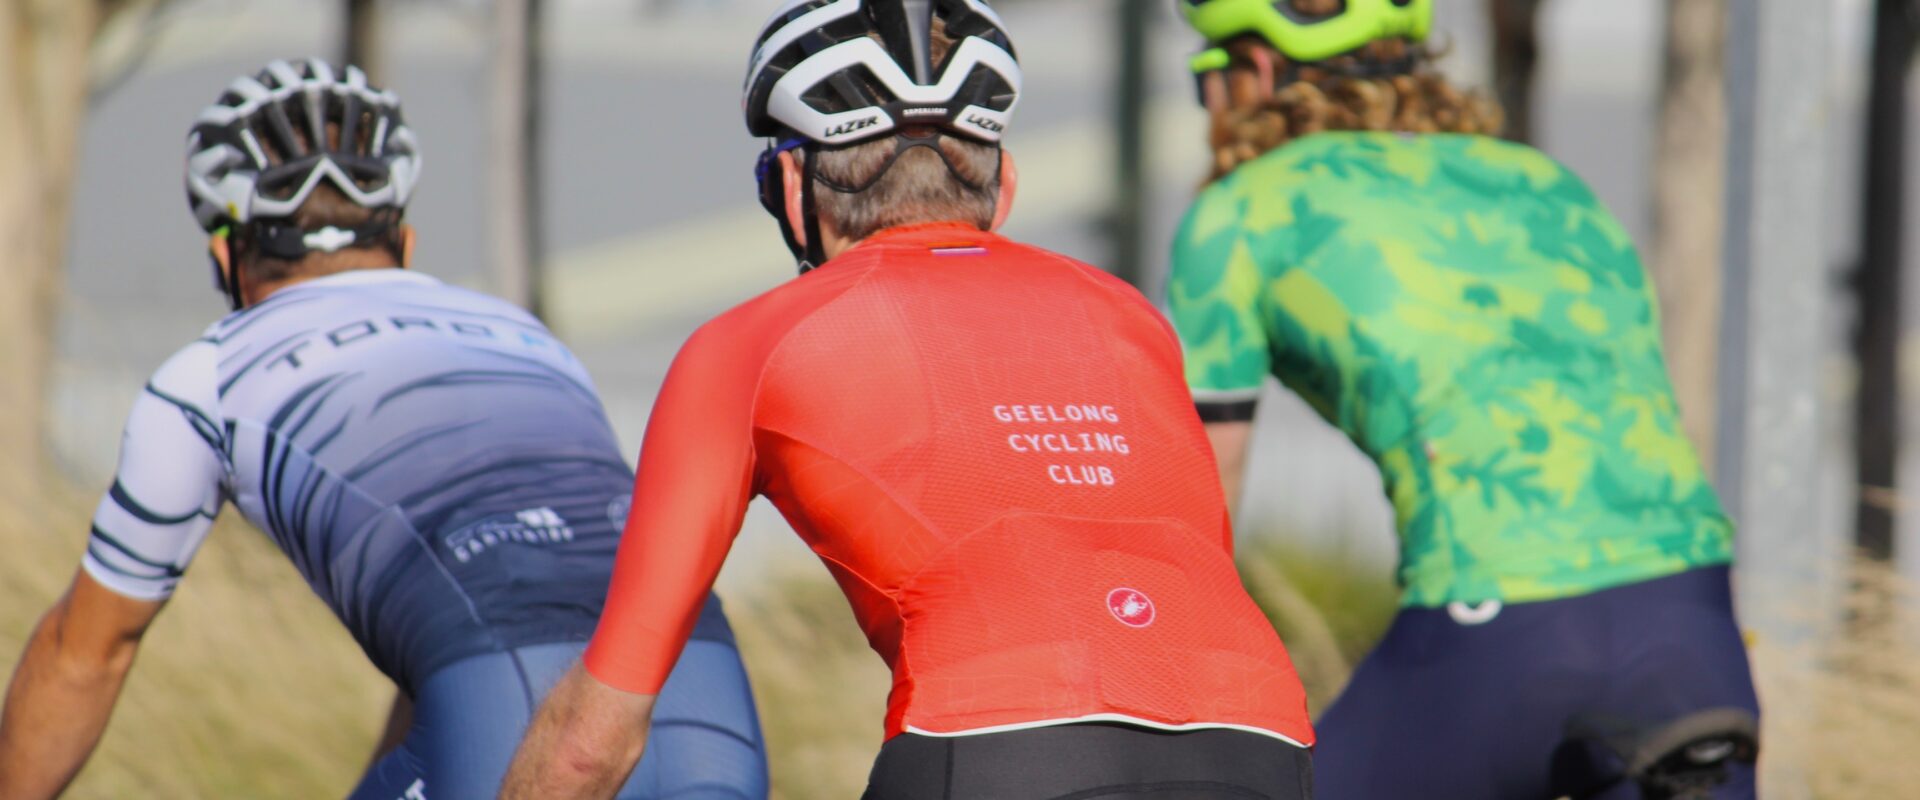 Geelong Cycling Club - Racing